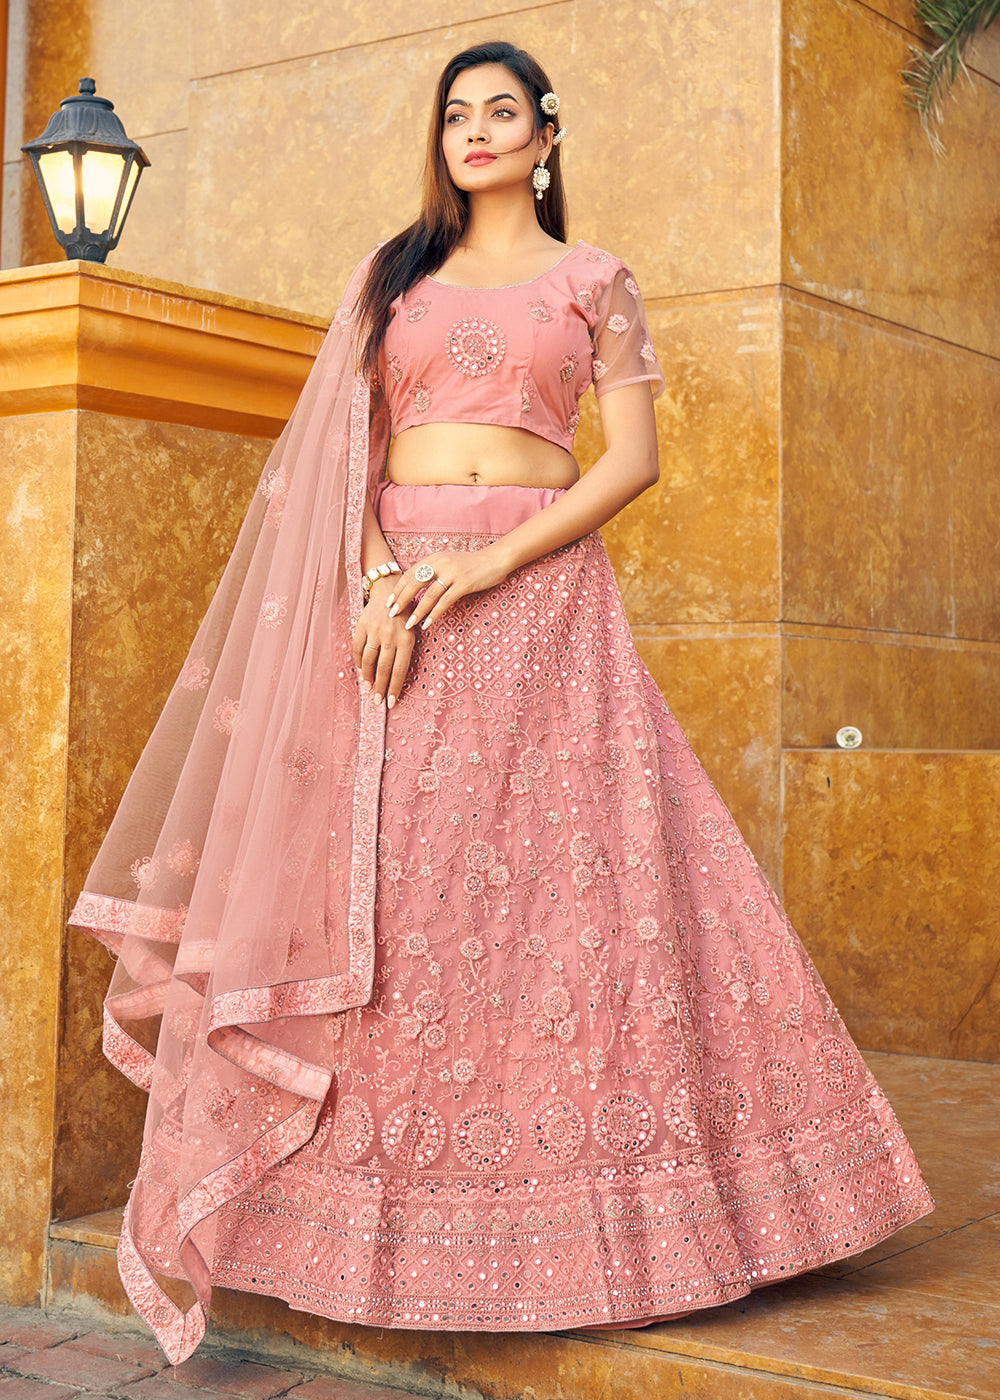 Buy Now Flamingo Pink Fancy Fabric Wedding Lehenga Choli Online in USA, UK, Canada & Worldwide at Empress Clothing. 